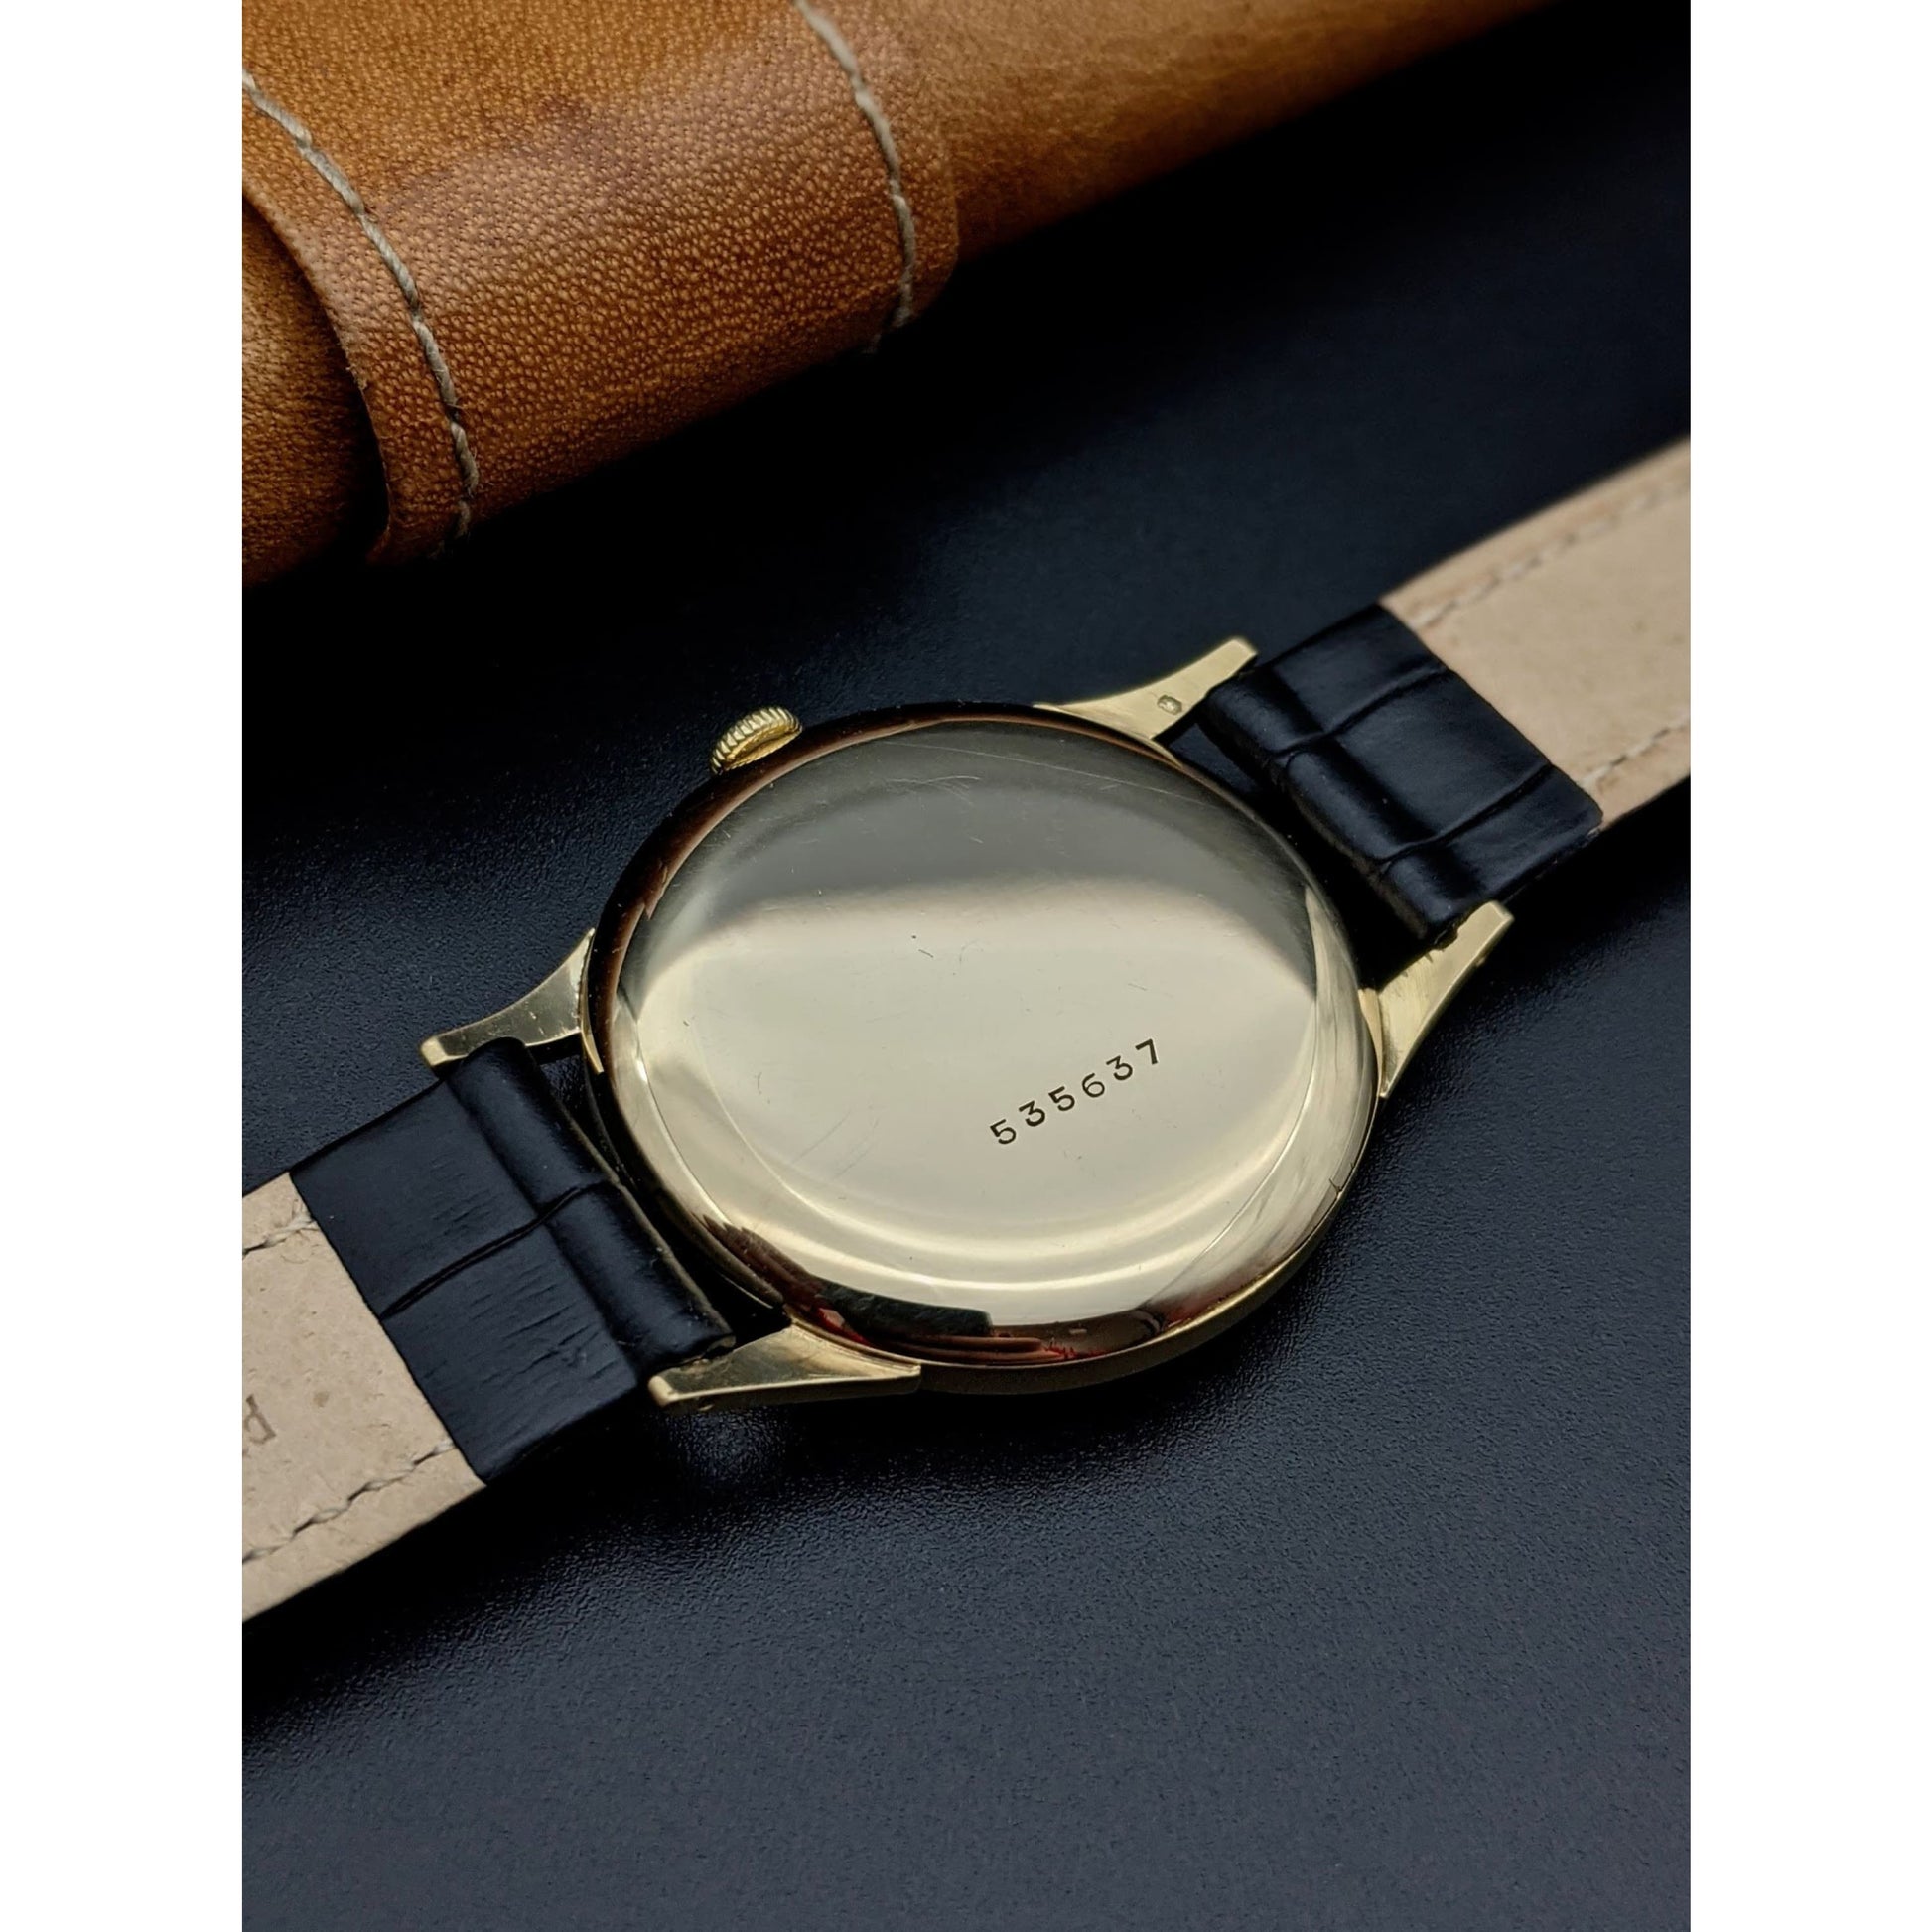 Zenith Solid Gold /Vintage 1945 /Serviced - Wristwatch